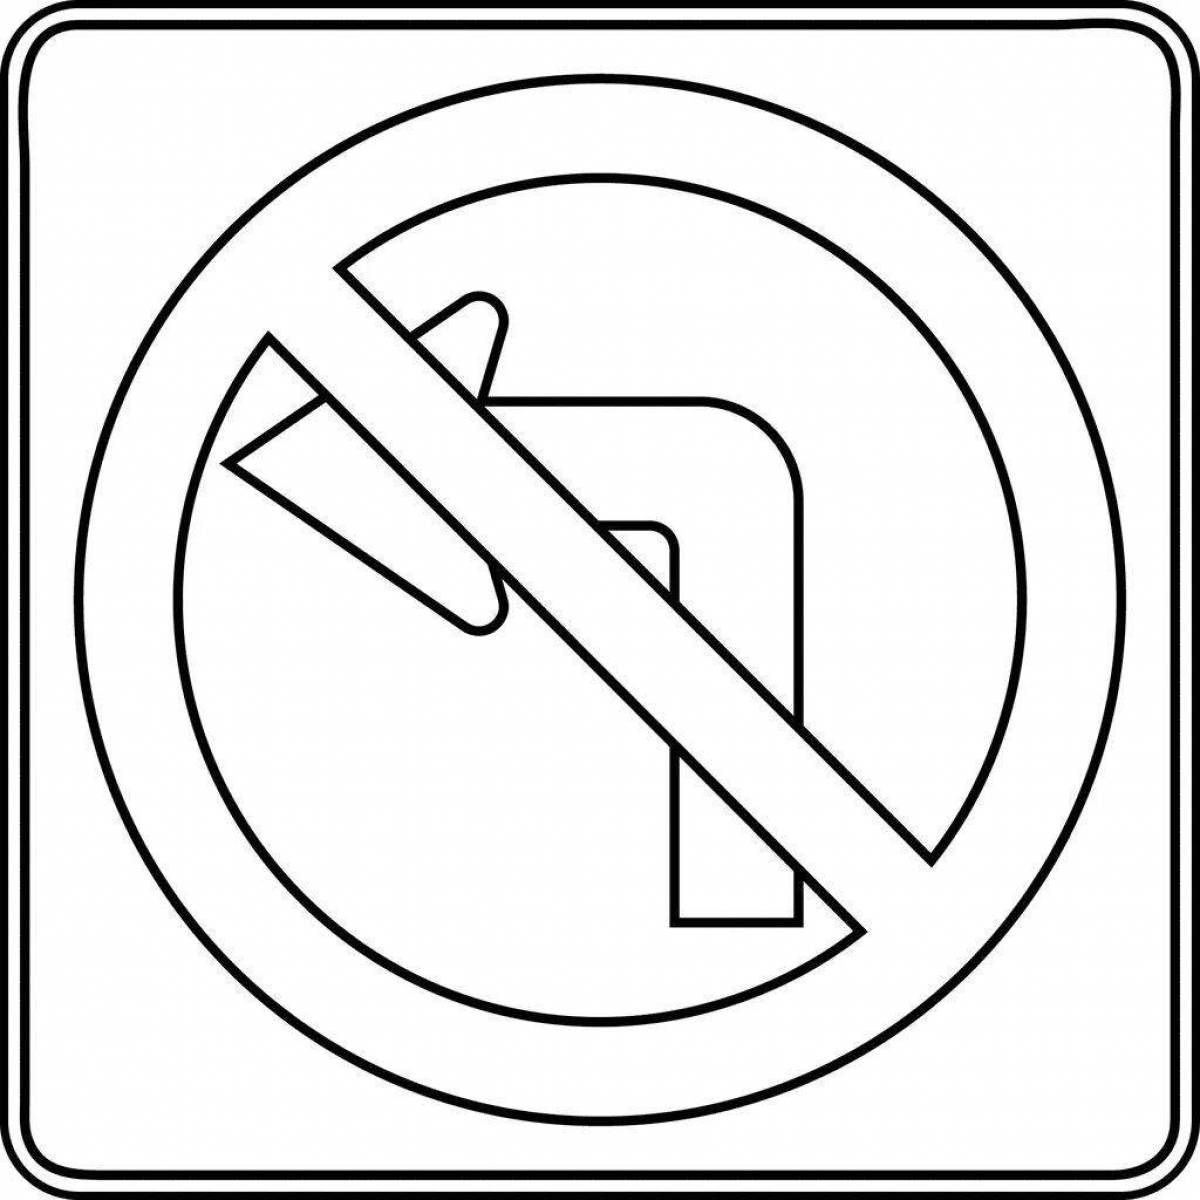 Coloring bold horn forbidden traffic sign